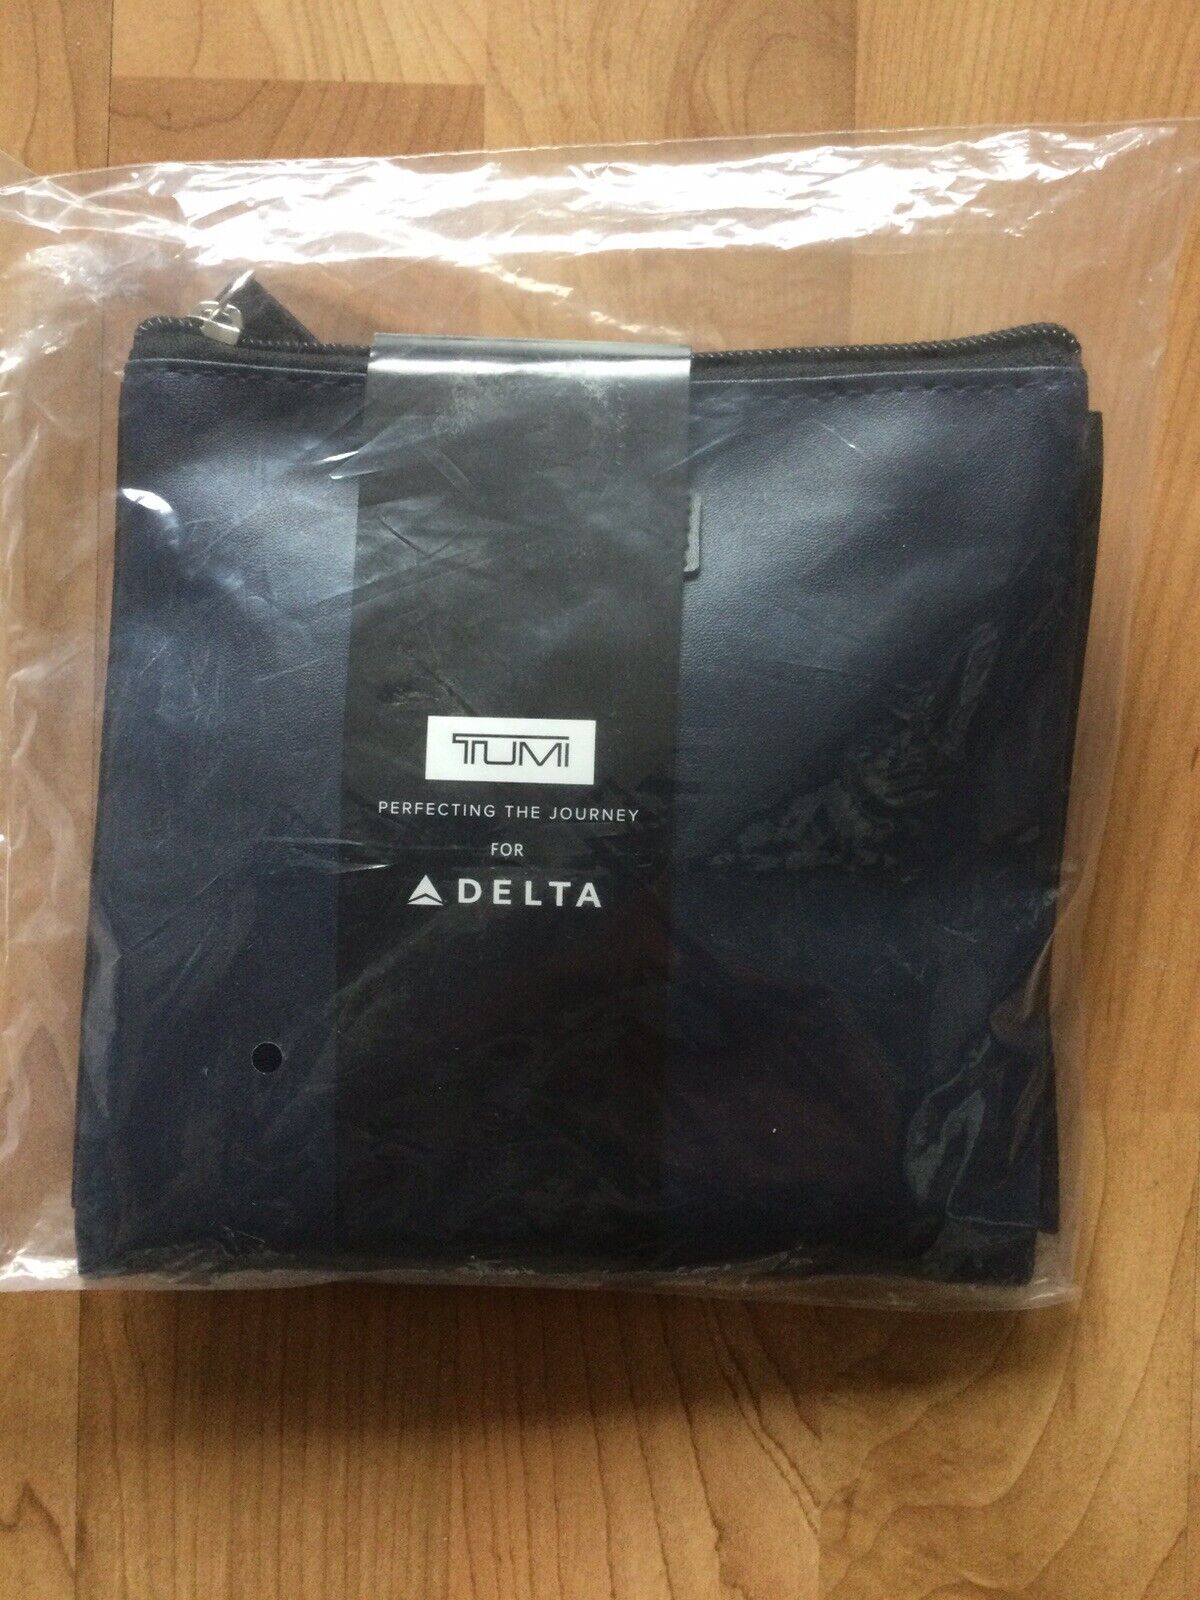 Delta Premium Select Soft Case Amenity Kits TUMI Never Opened Unused